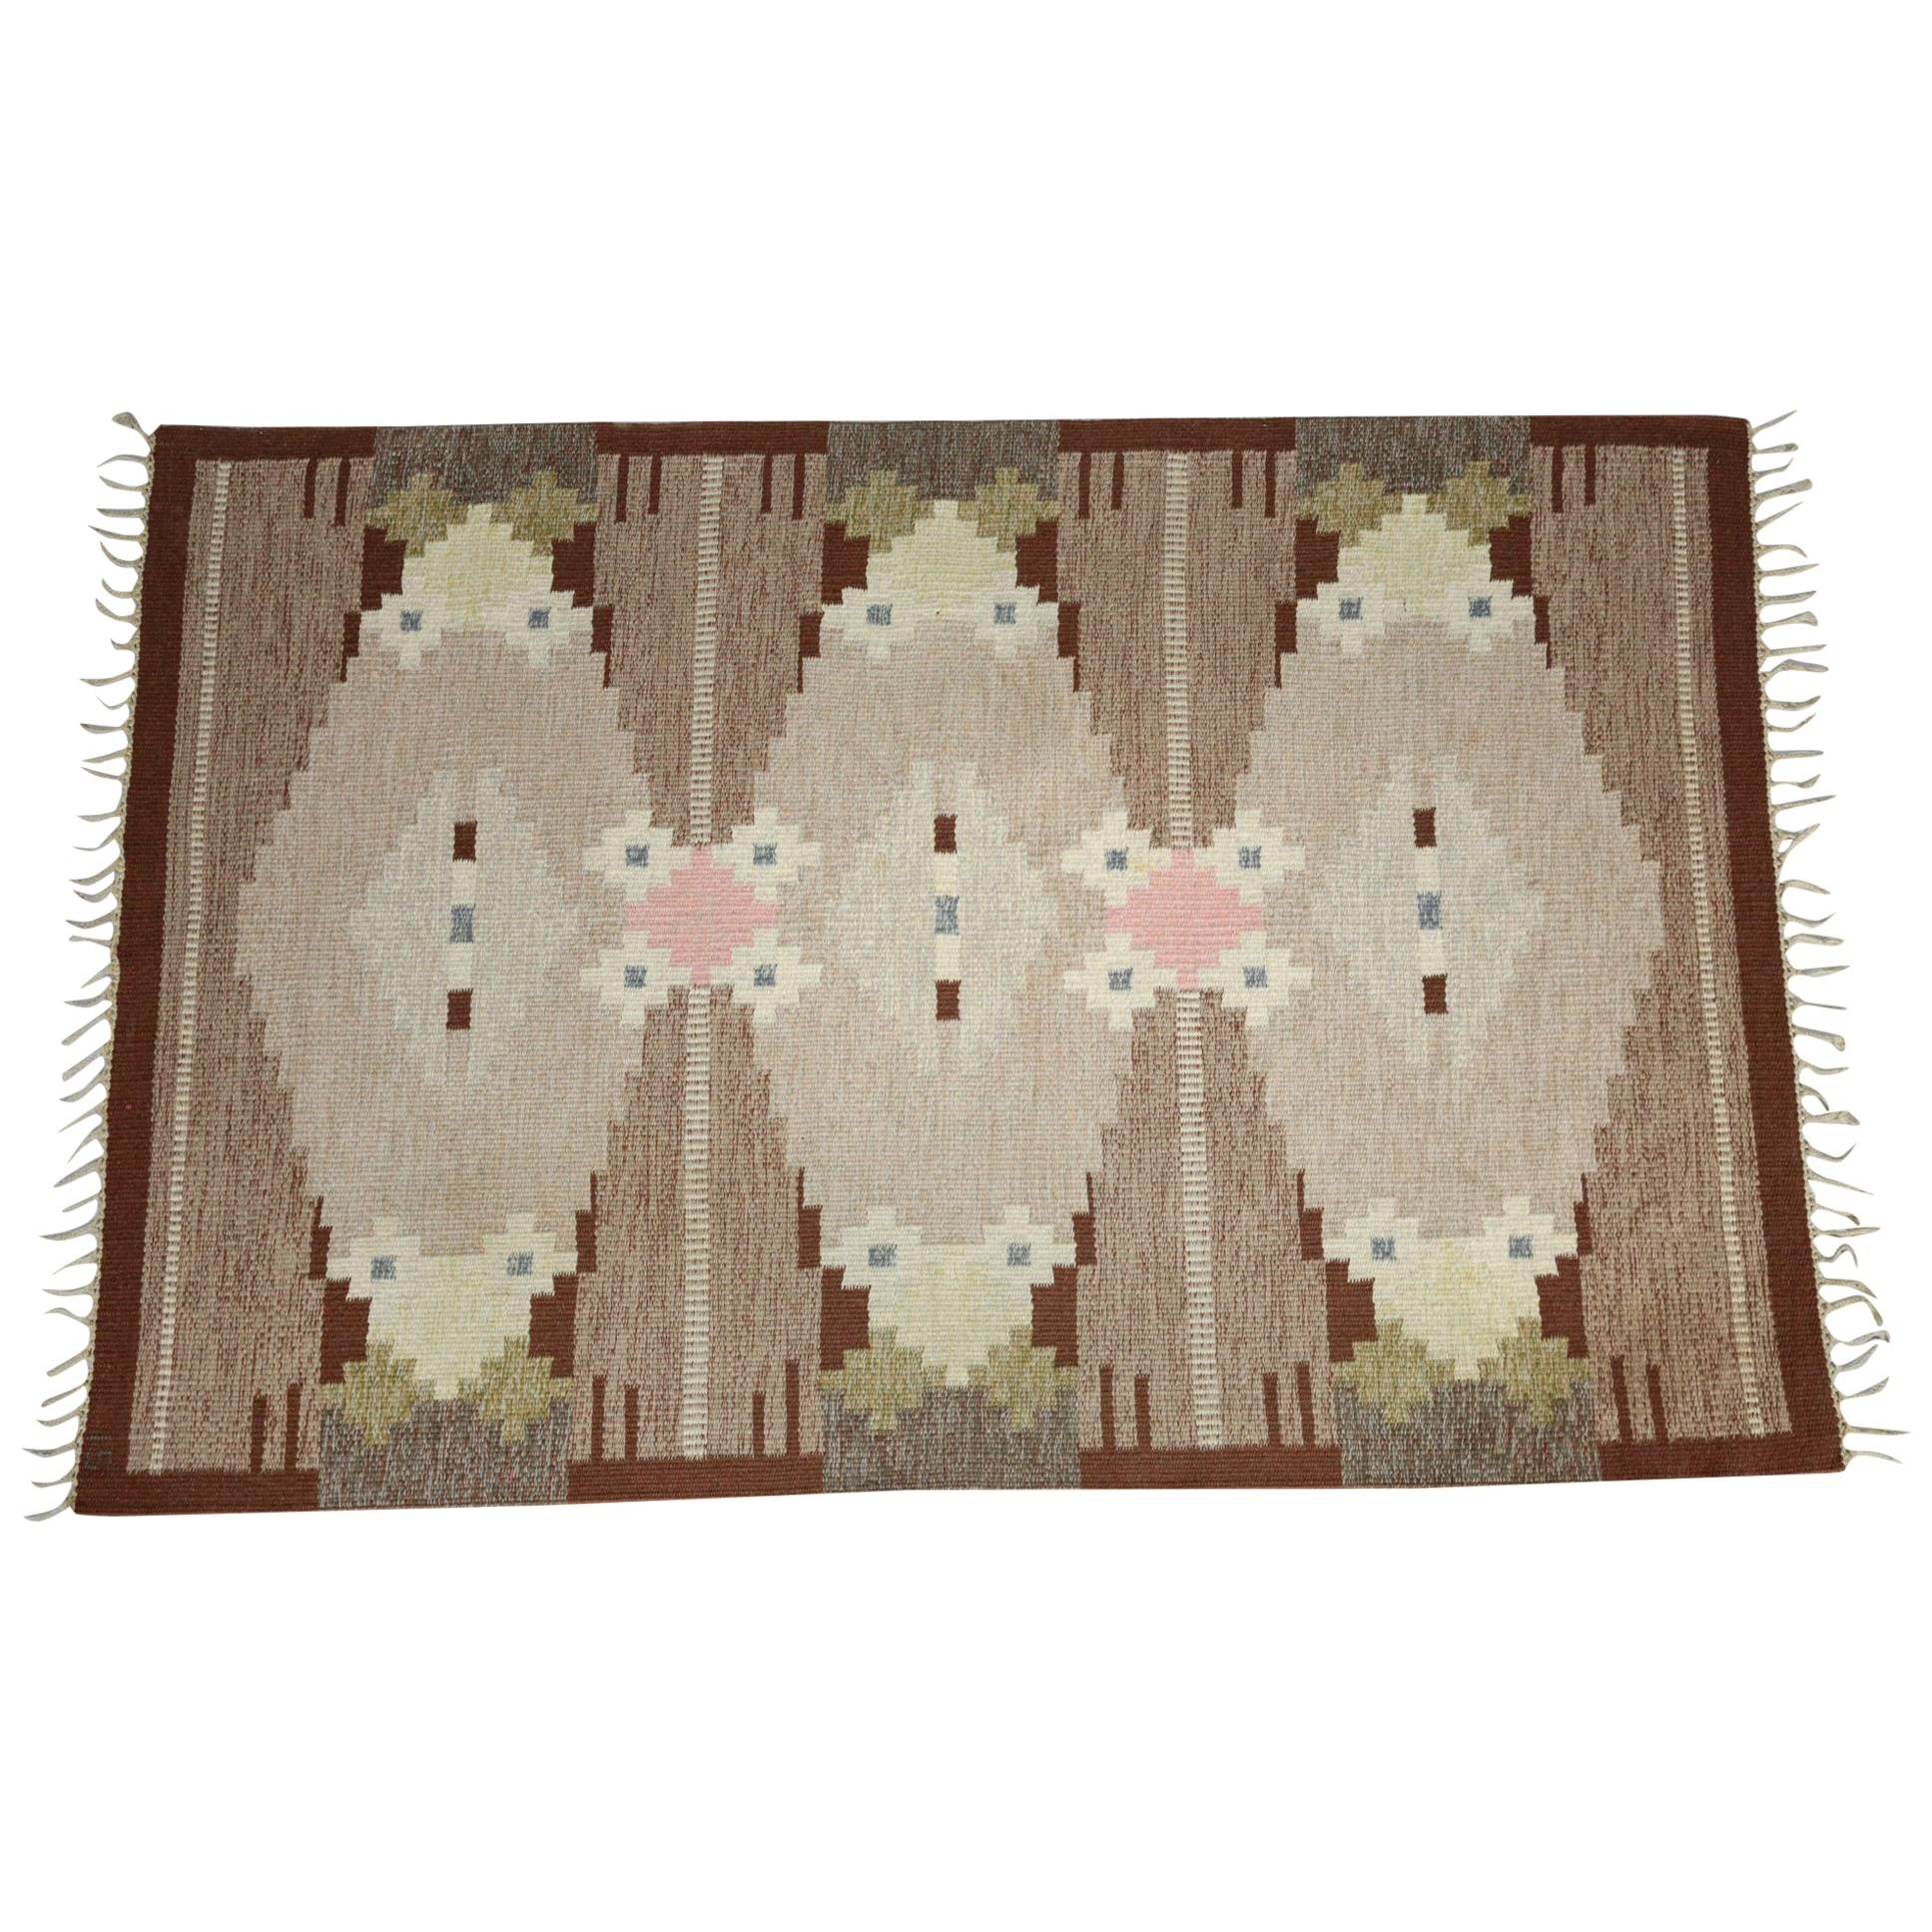 Ingegerd Silow Carpet Handwoven, Swedish Rug